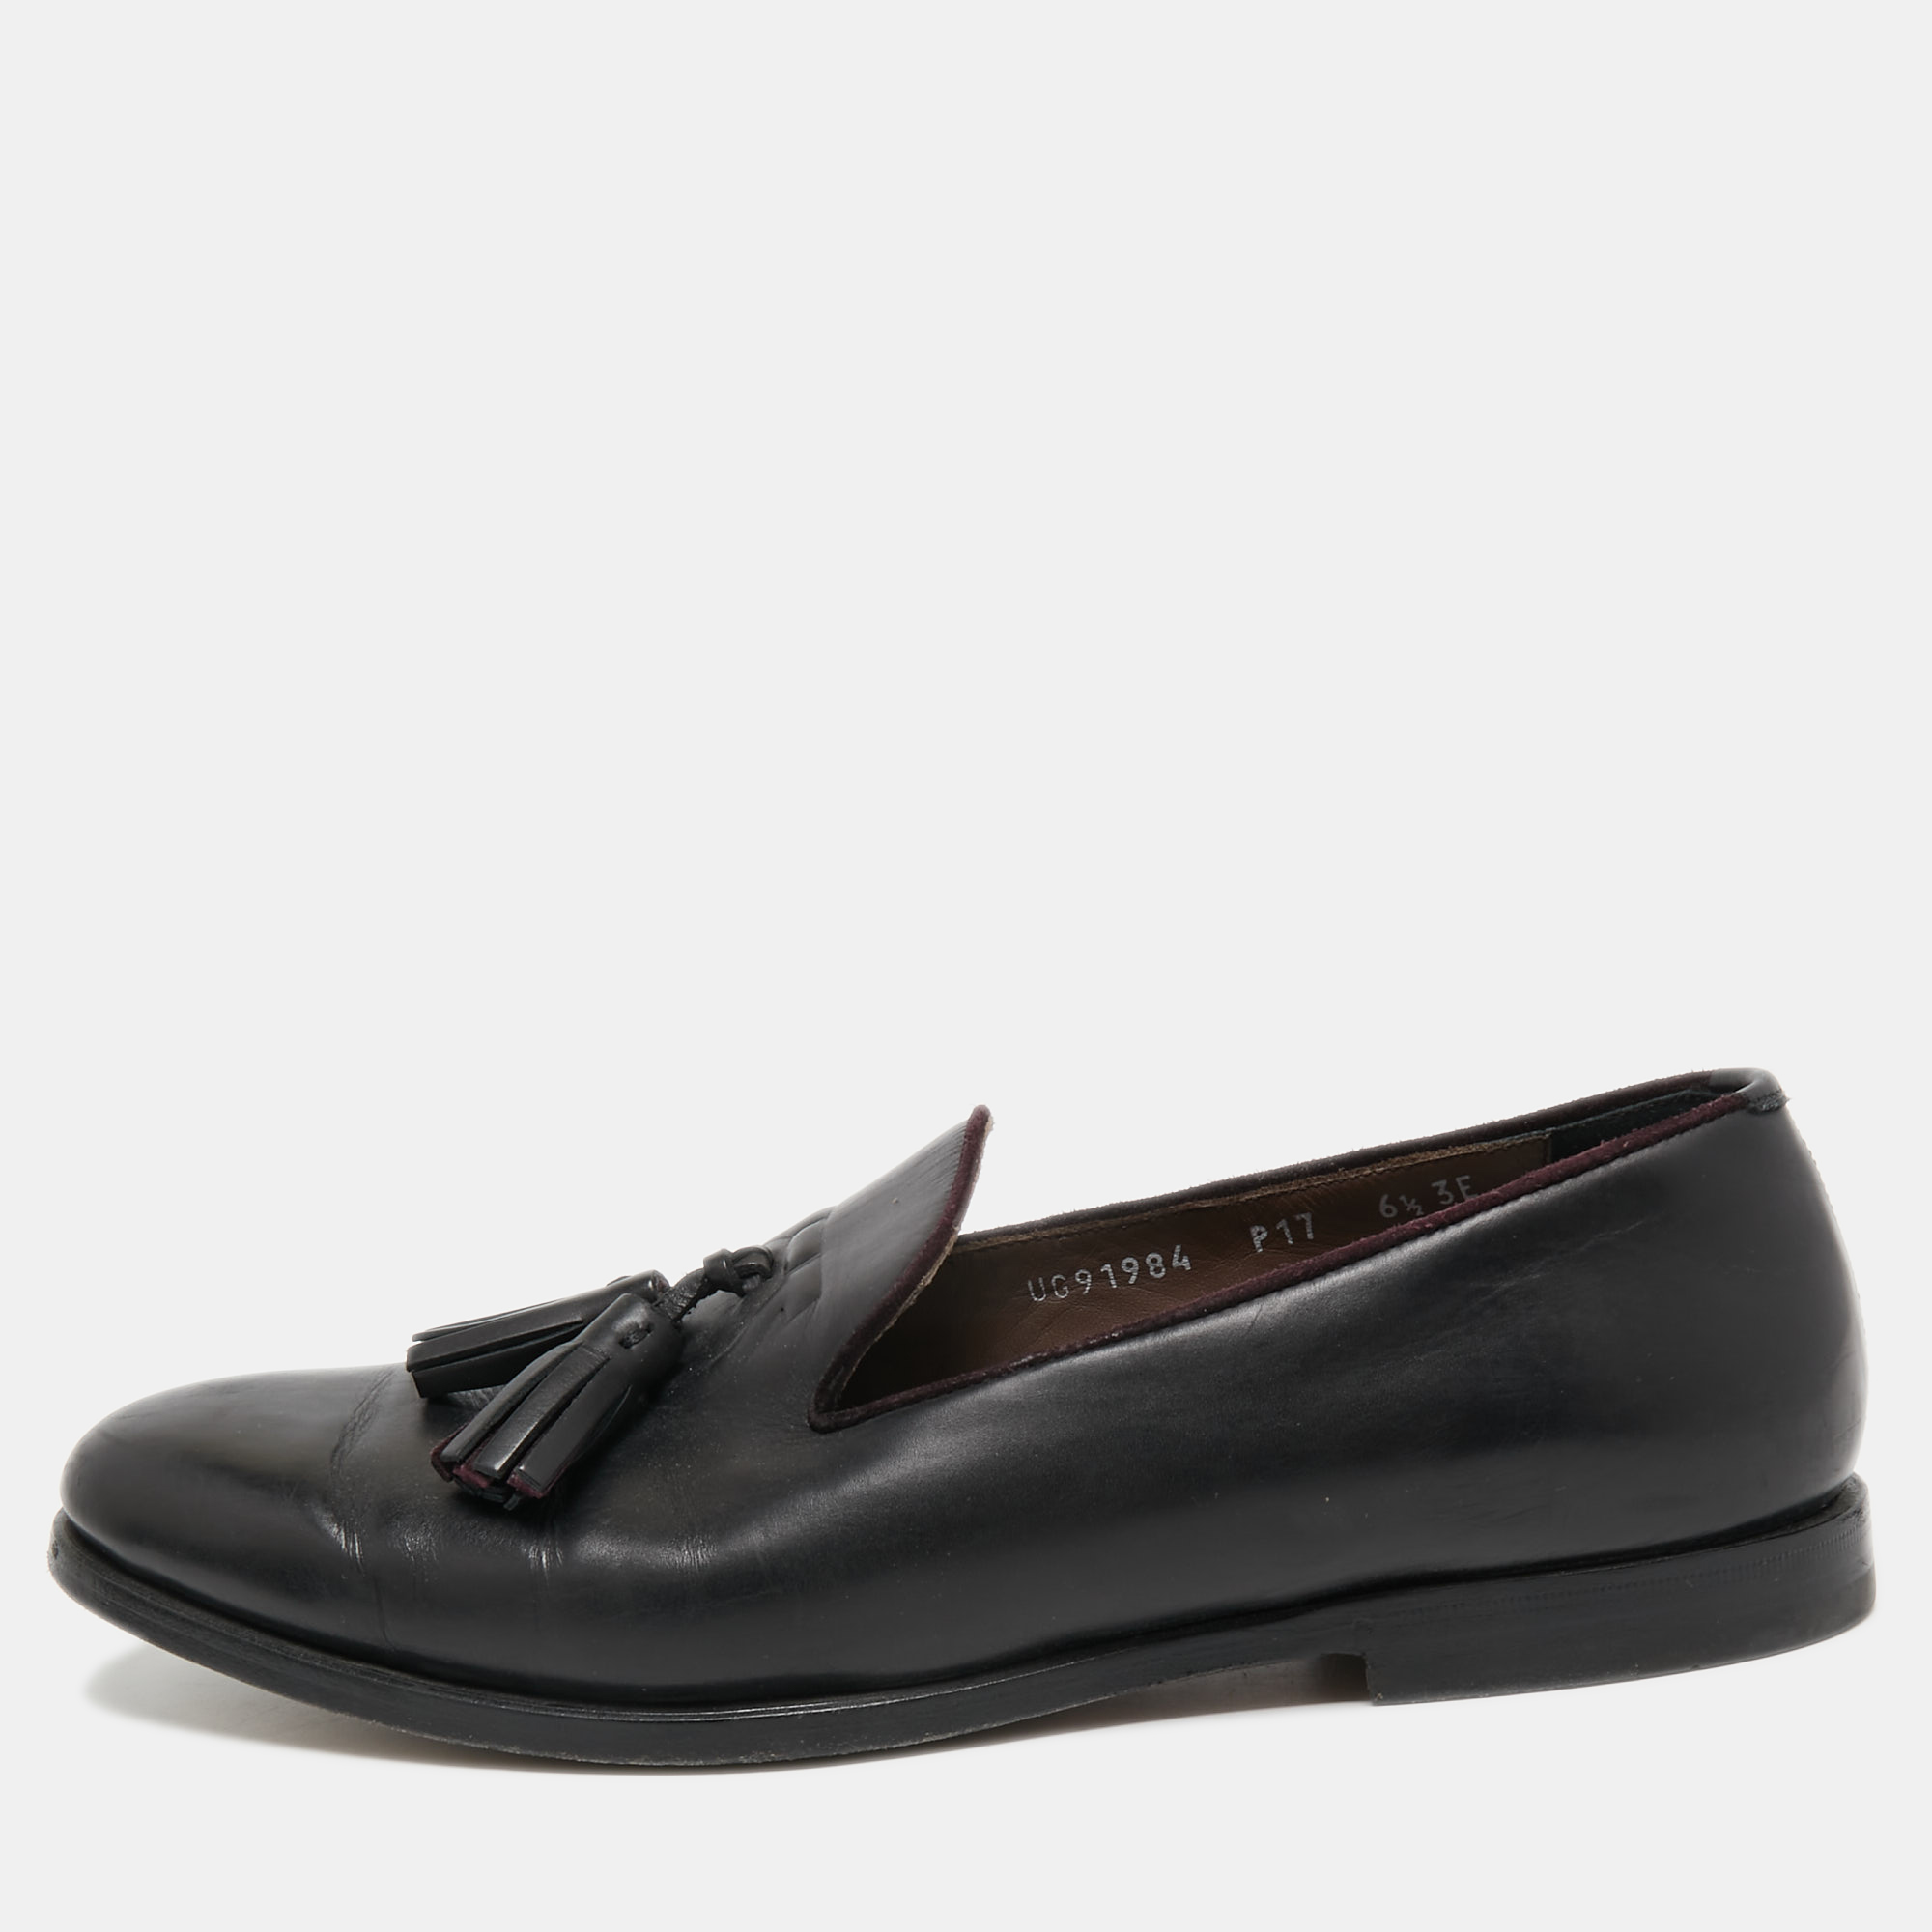 Pre-owned Salvatore Ferragamo Black Leather Tassel Loafers Size 40.5